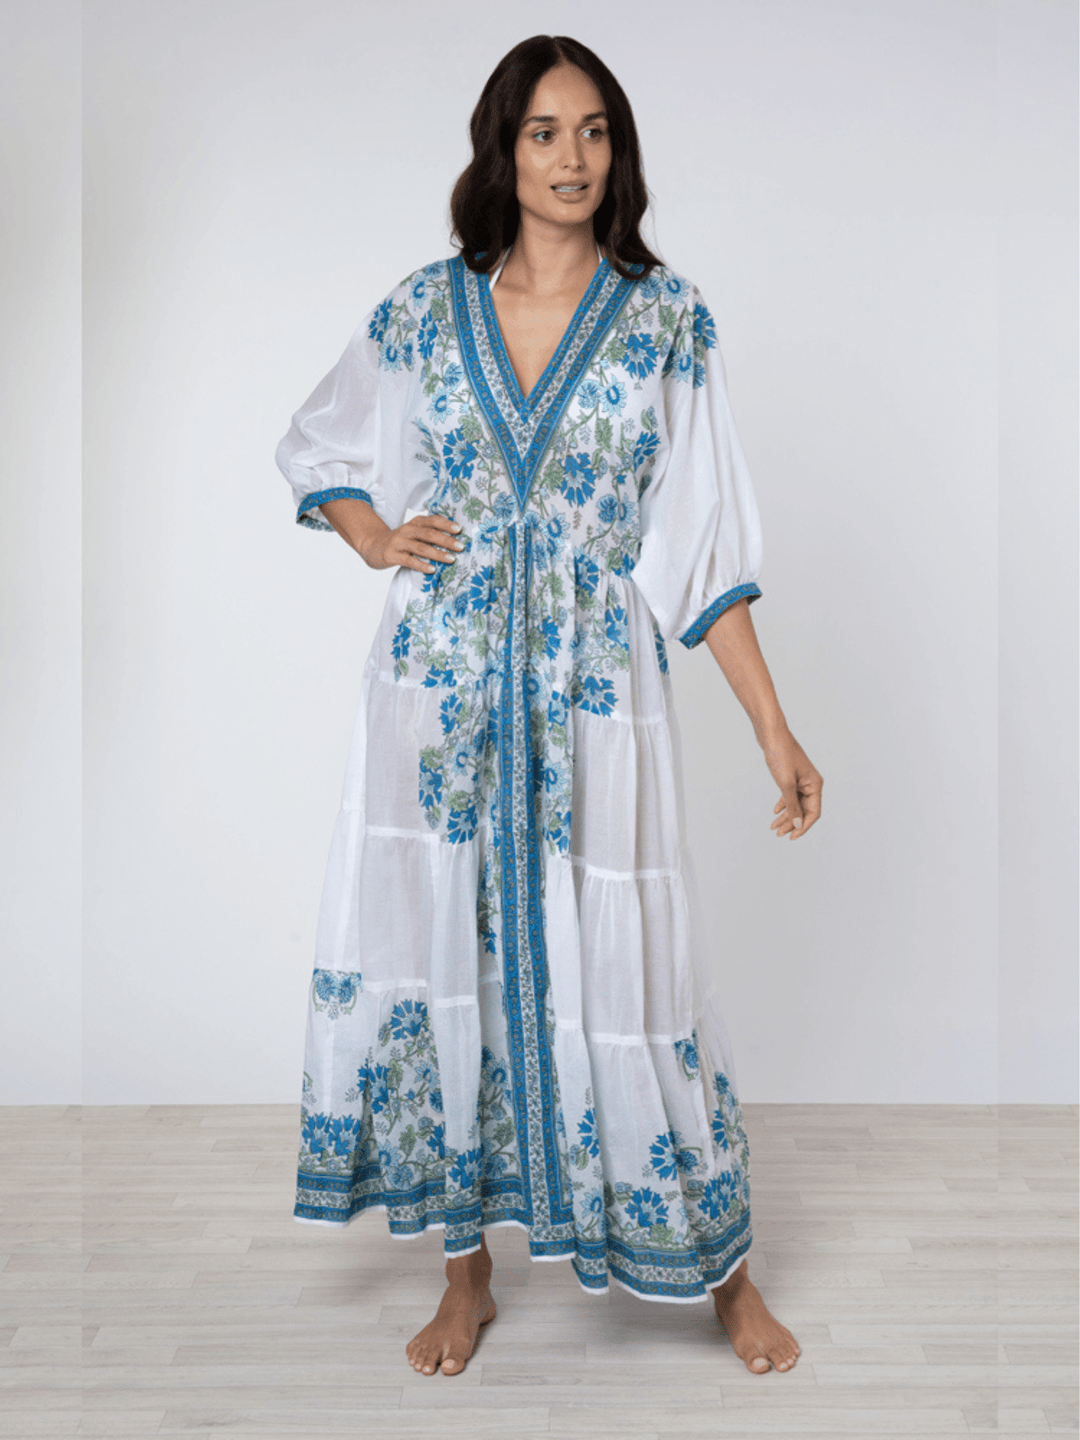 Juliet Dunn Dress White / Blue / Aqua Maxi Dress w/ Rose Border Print